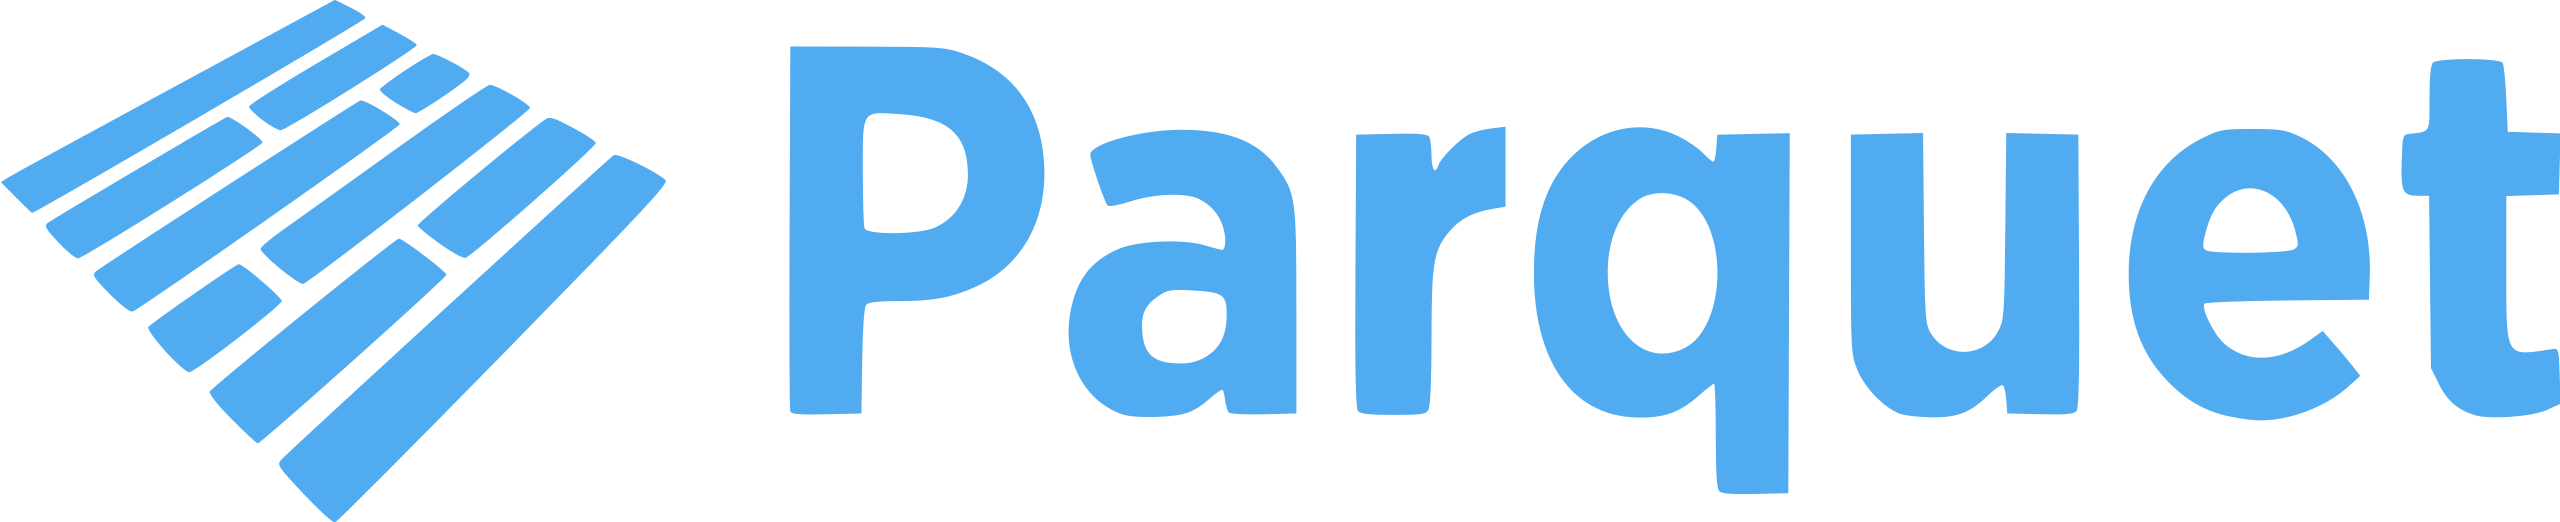 Apache_Parquet_logo.svg